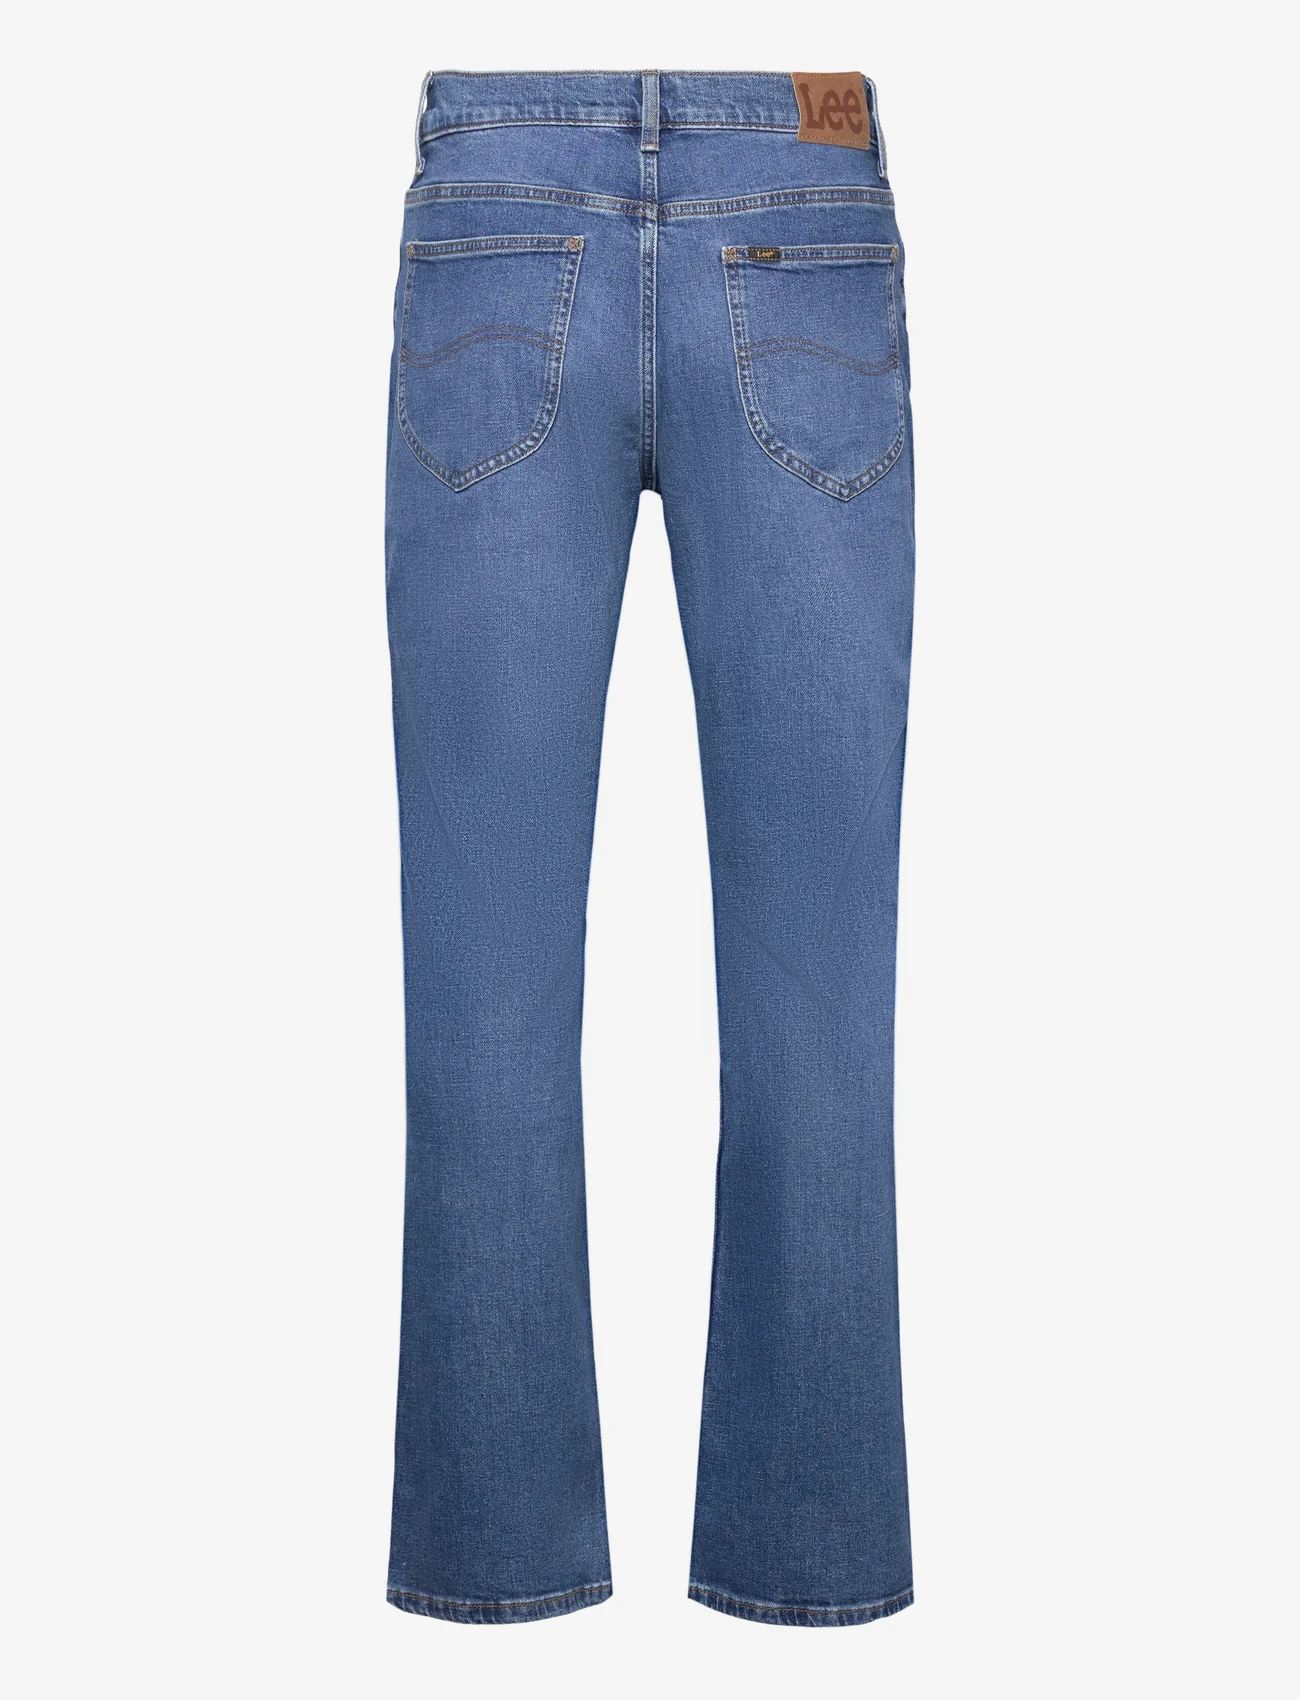 Lee Jeans - 70S BOOTCUT - Įprasto kirpimo džinsai - blue shadow mid - 1